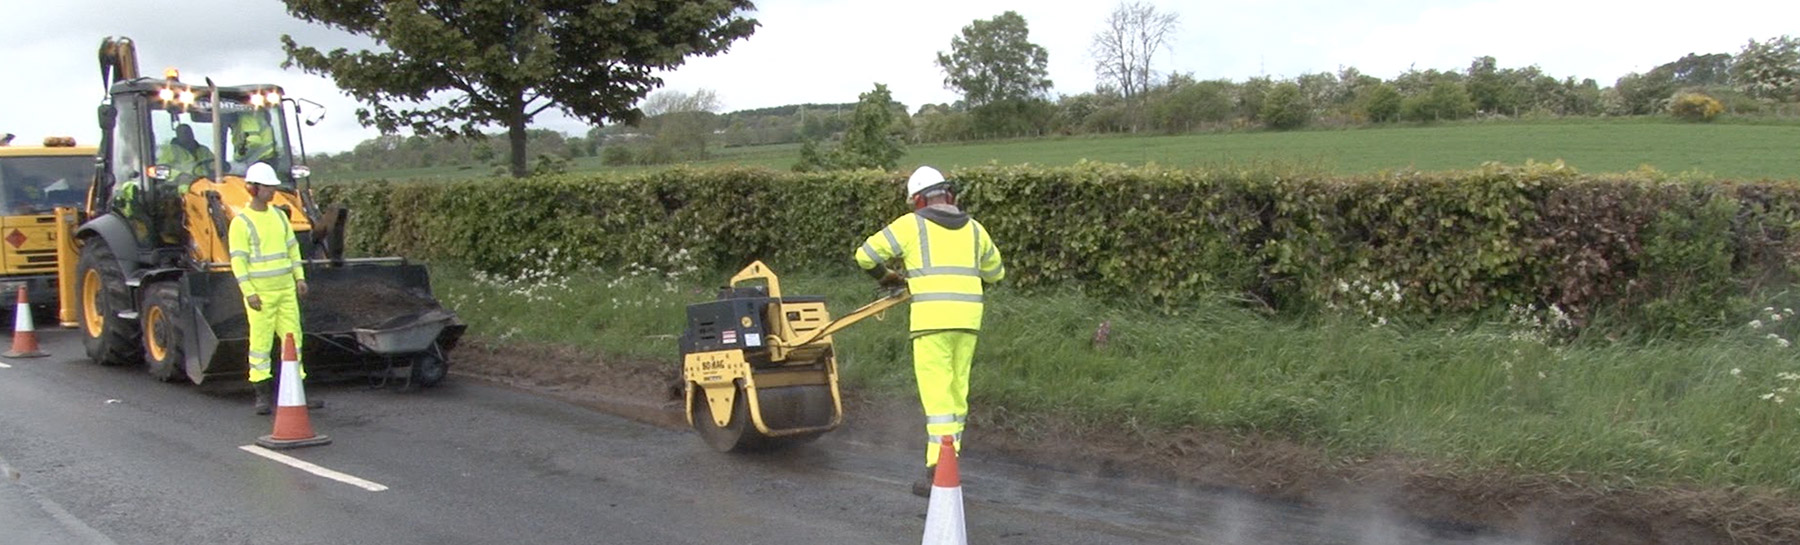 workers resurfacing country road